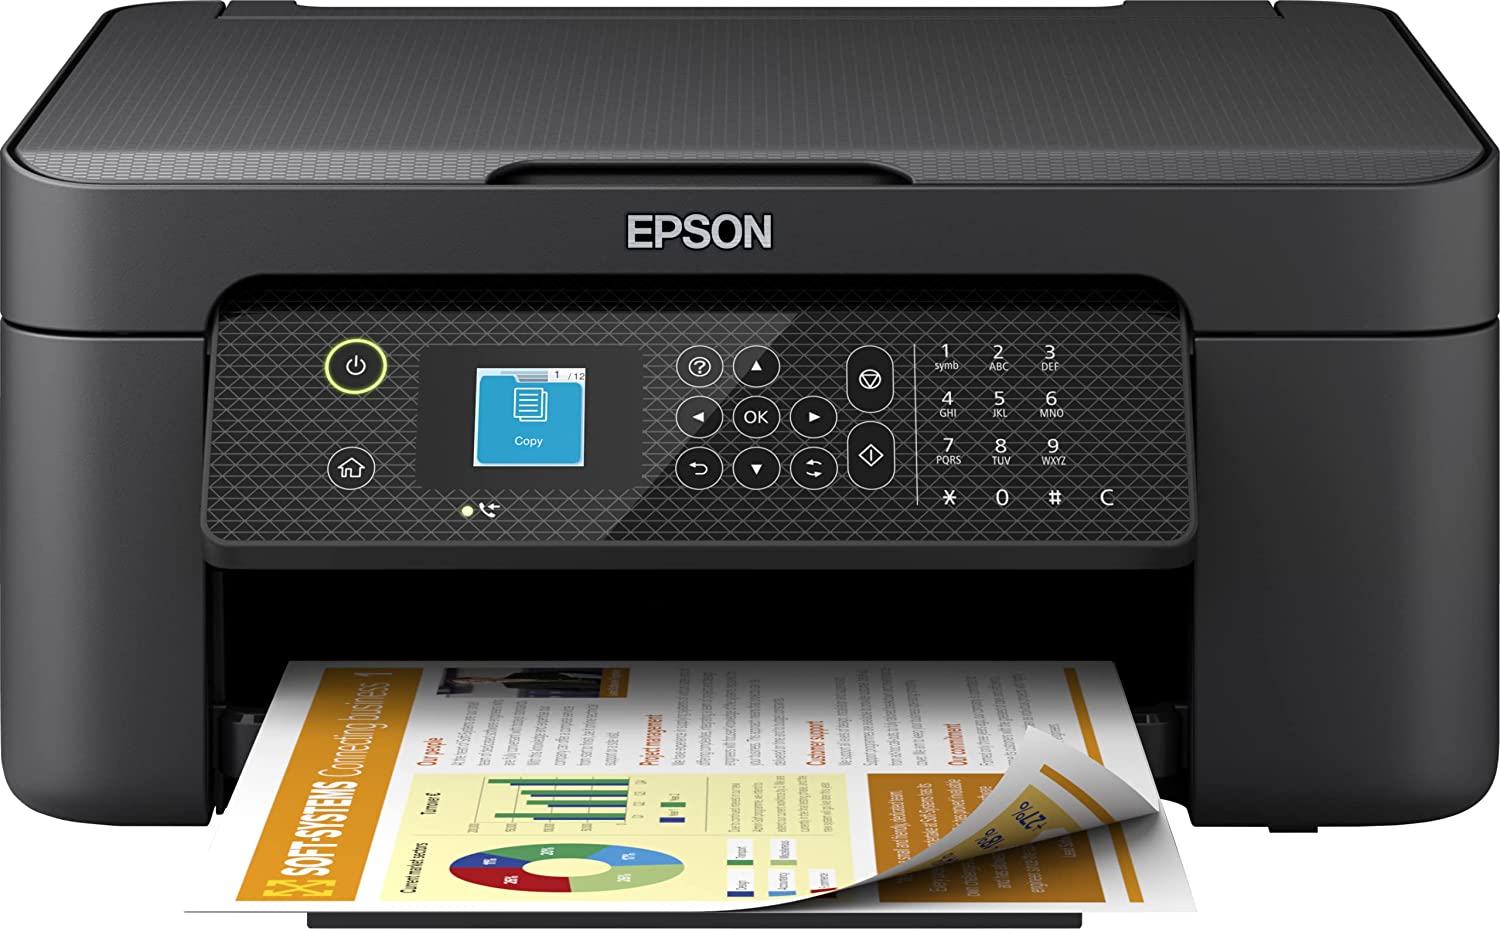 Imprimante multifonction Epson Workforce WF2910DWF Fax couleur recto verso WiFi 33 ppm